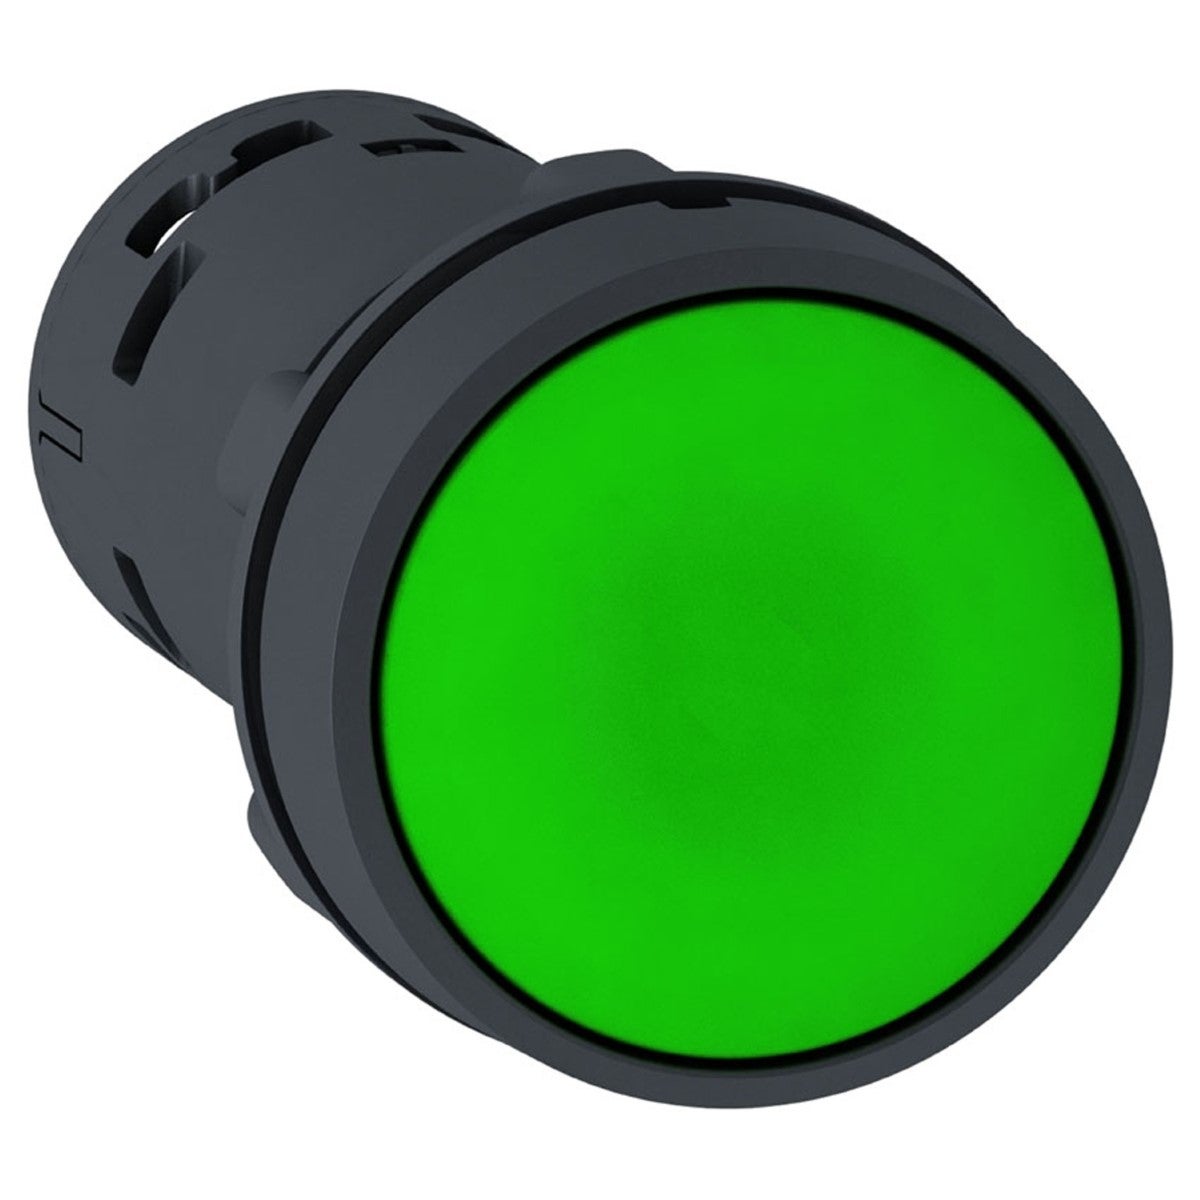 Monolithic push button, plastic, green, Ã˜22, spring return, unmarked, 1 NO